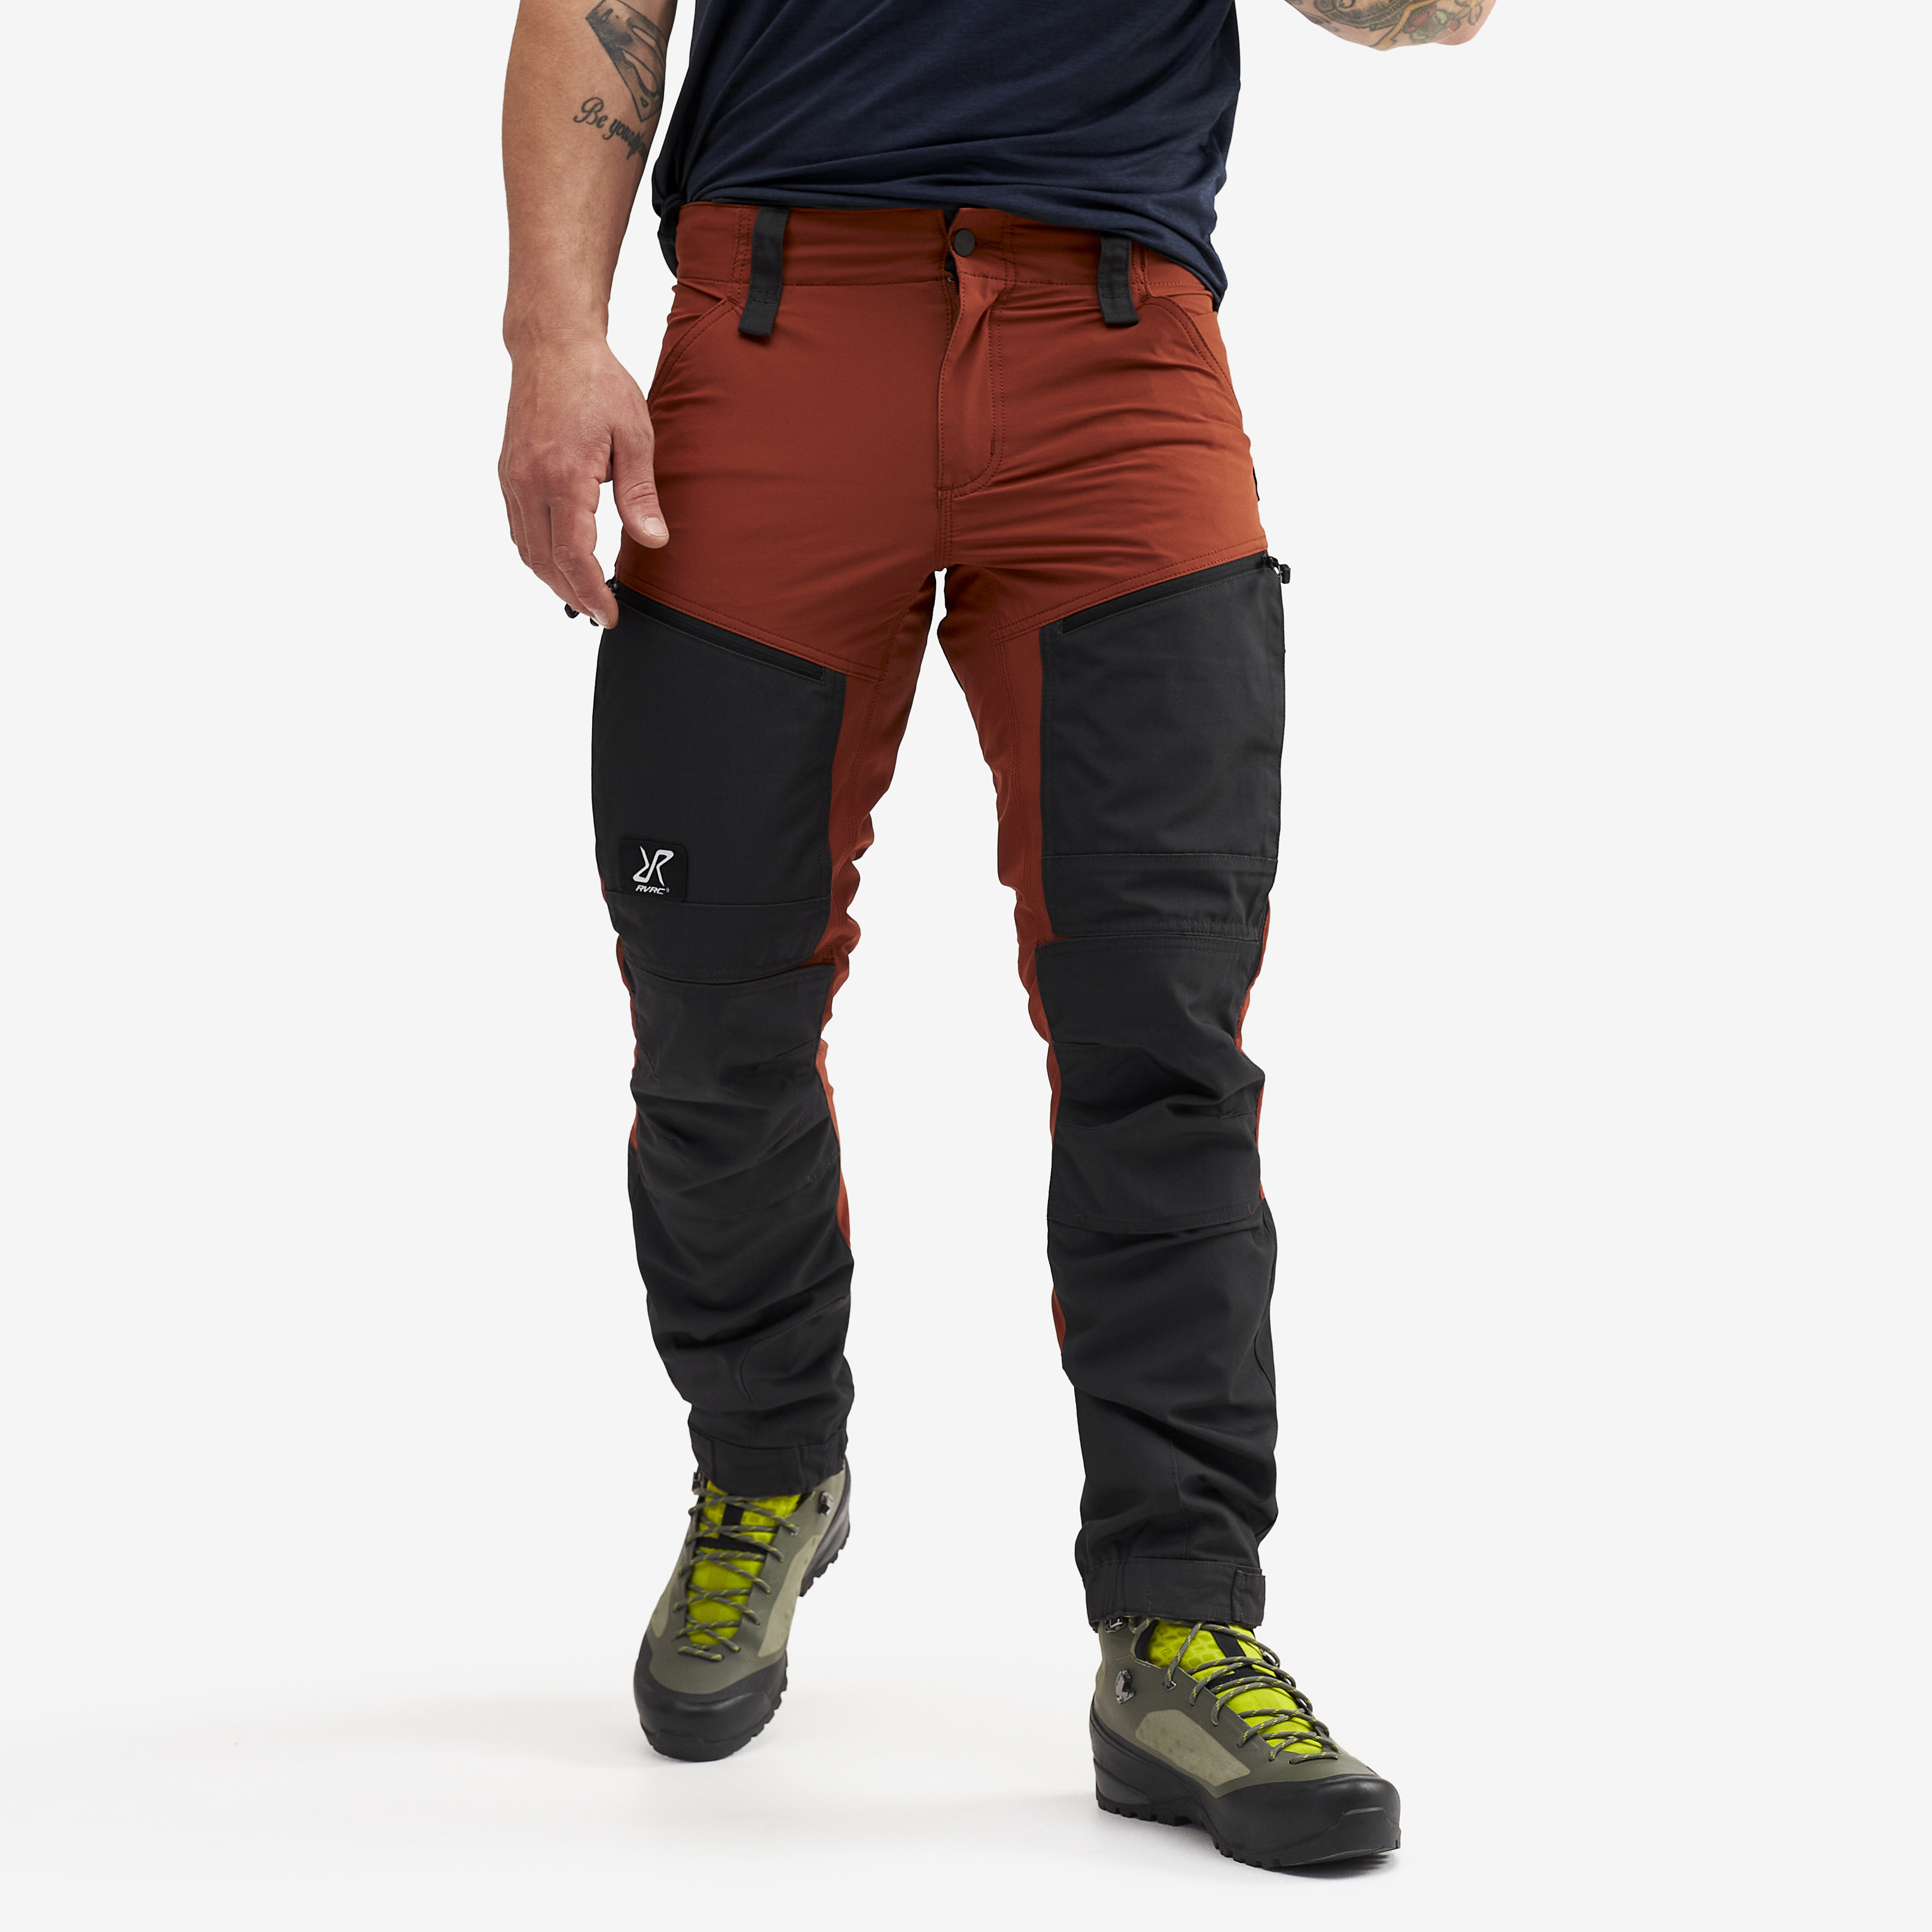 RVRC GP Pro Short hiking pants for men in orange